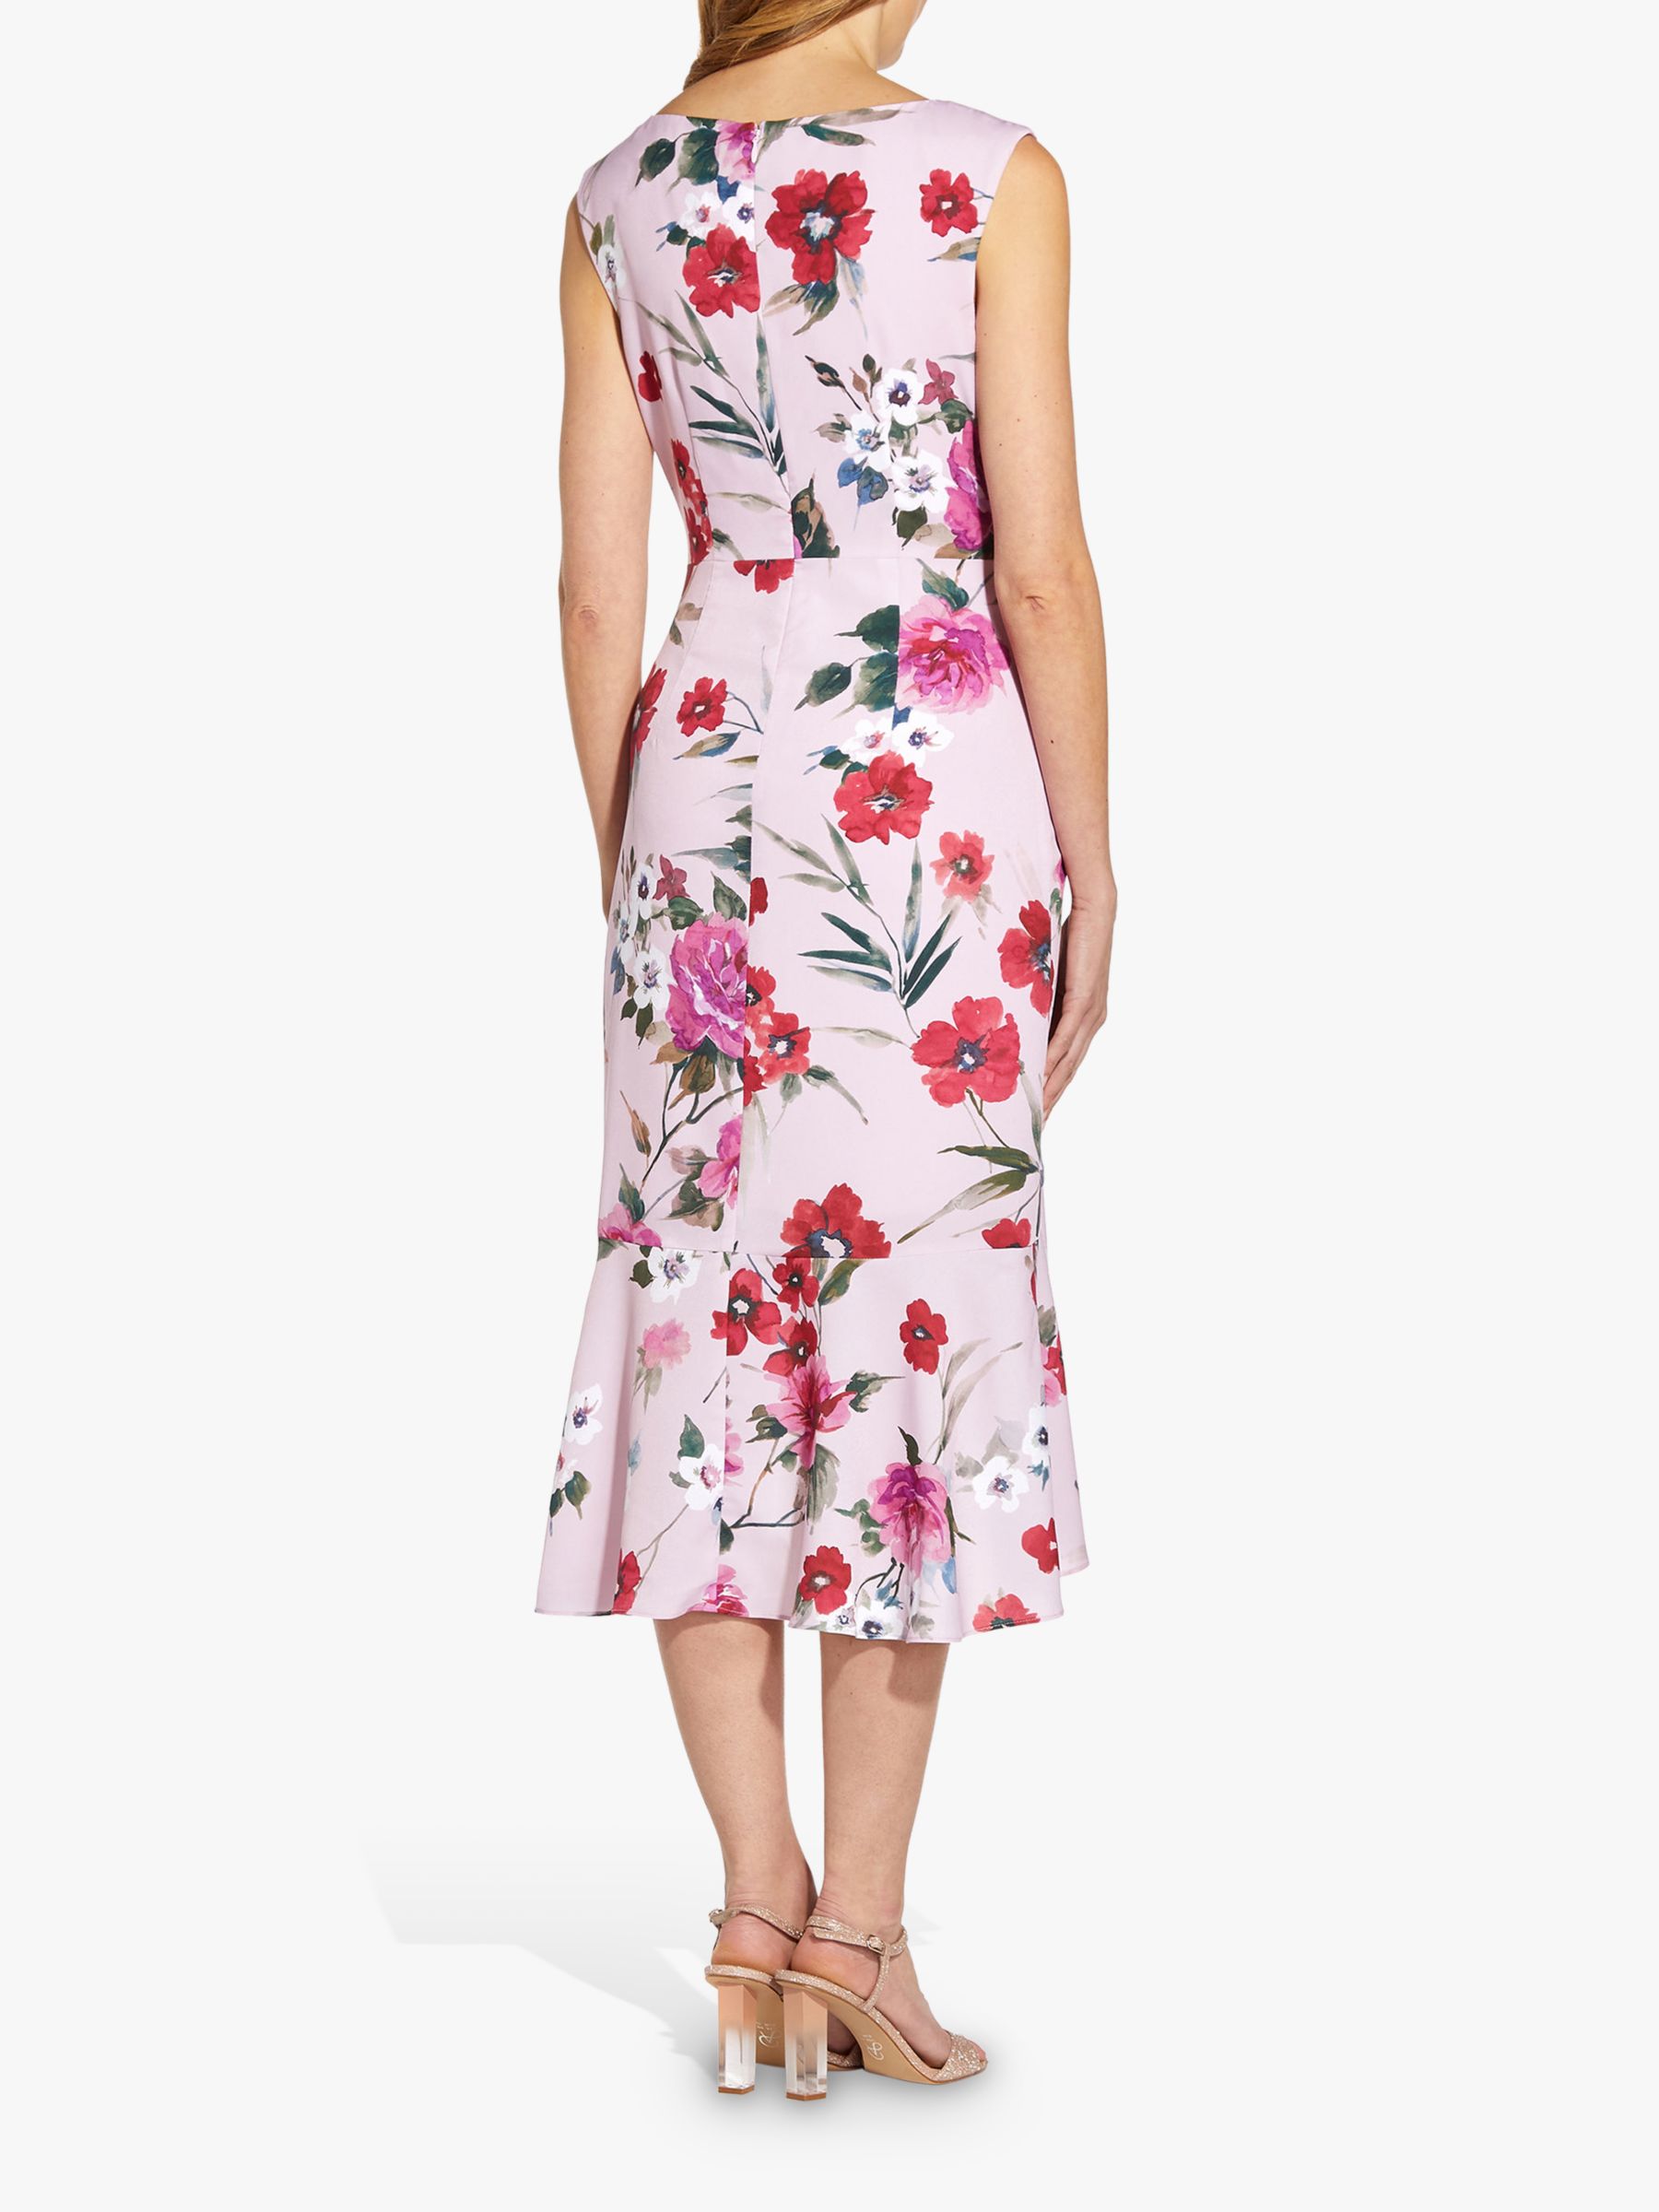 Adrianna Papell Floral Print Sleeveless Midi Dress, Pink/Multi